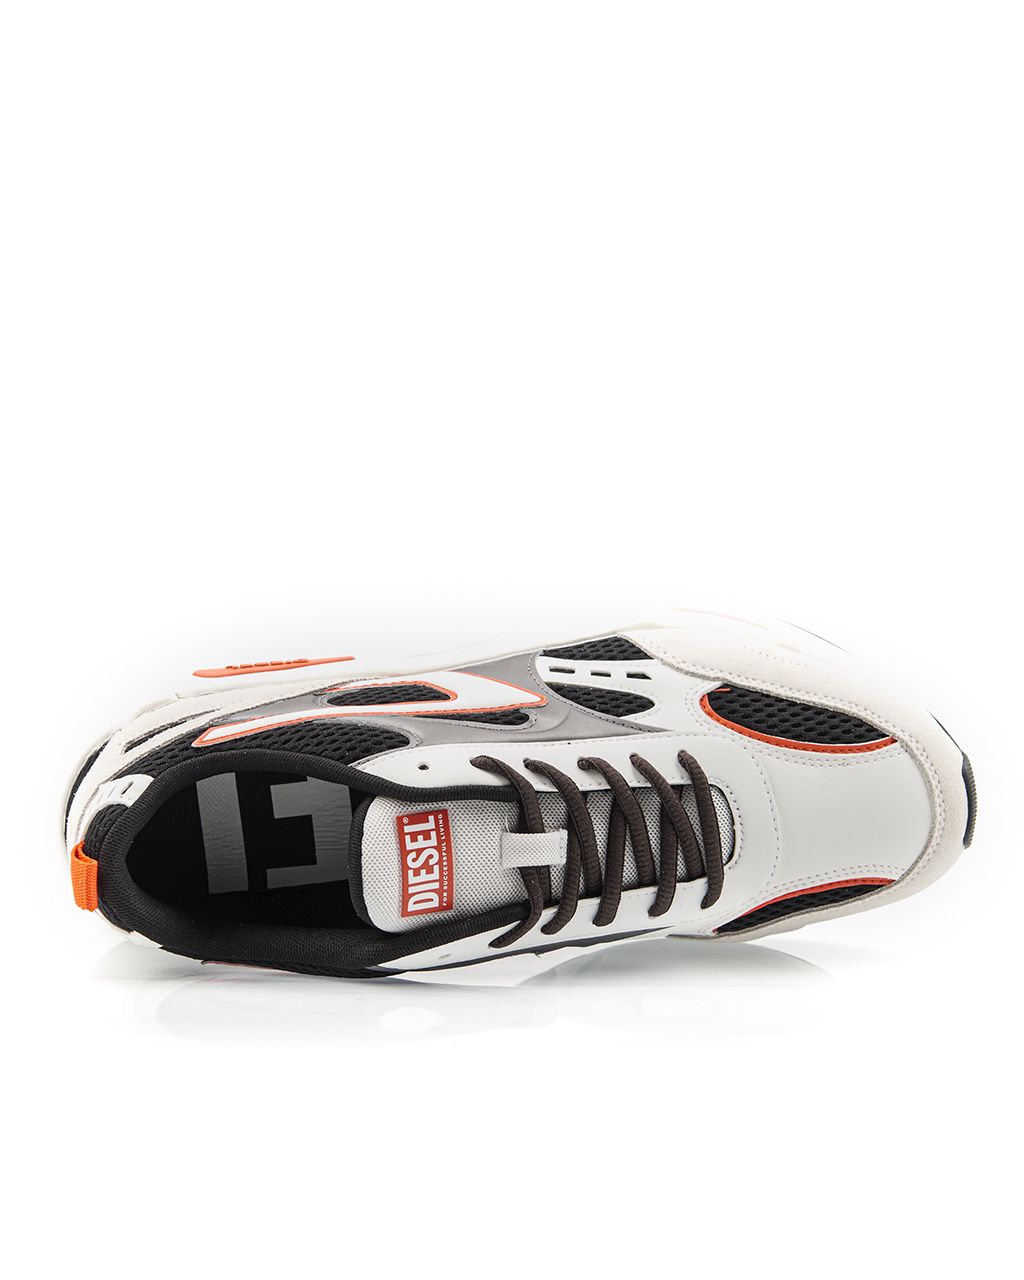 Diesel S-Serendipity Sport Sneakers Wit 078205-001-41